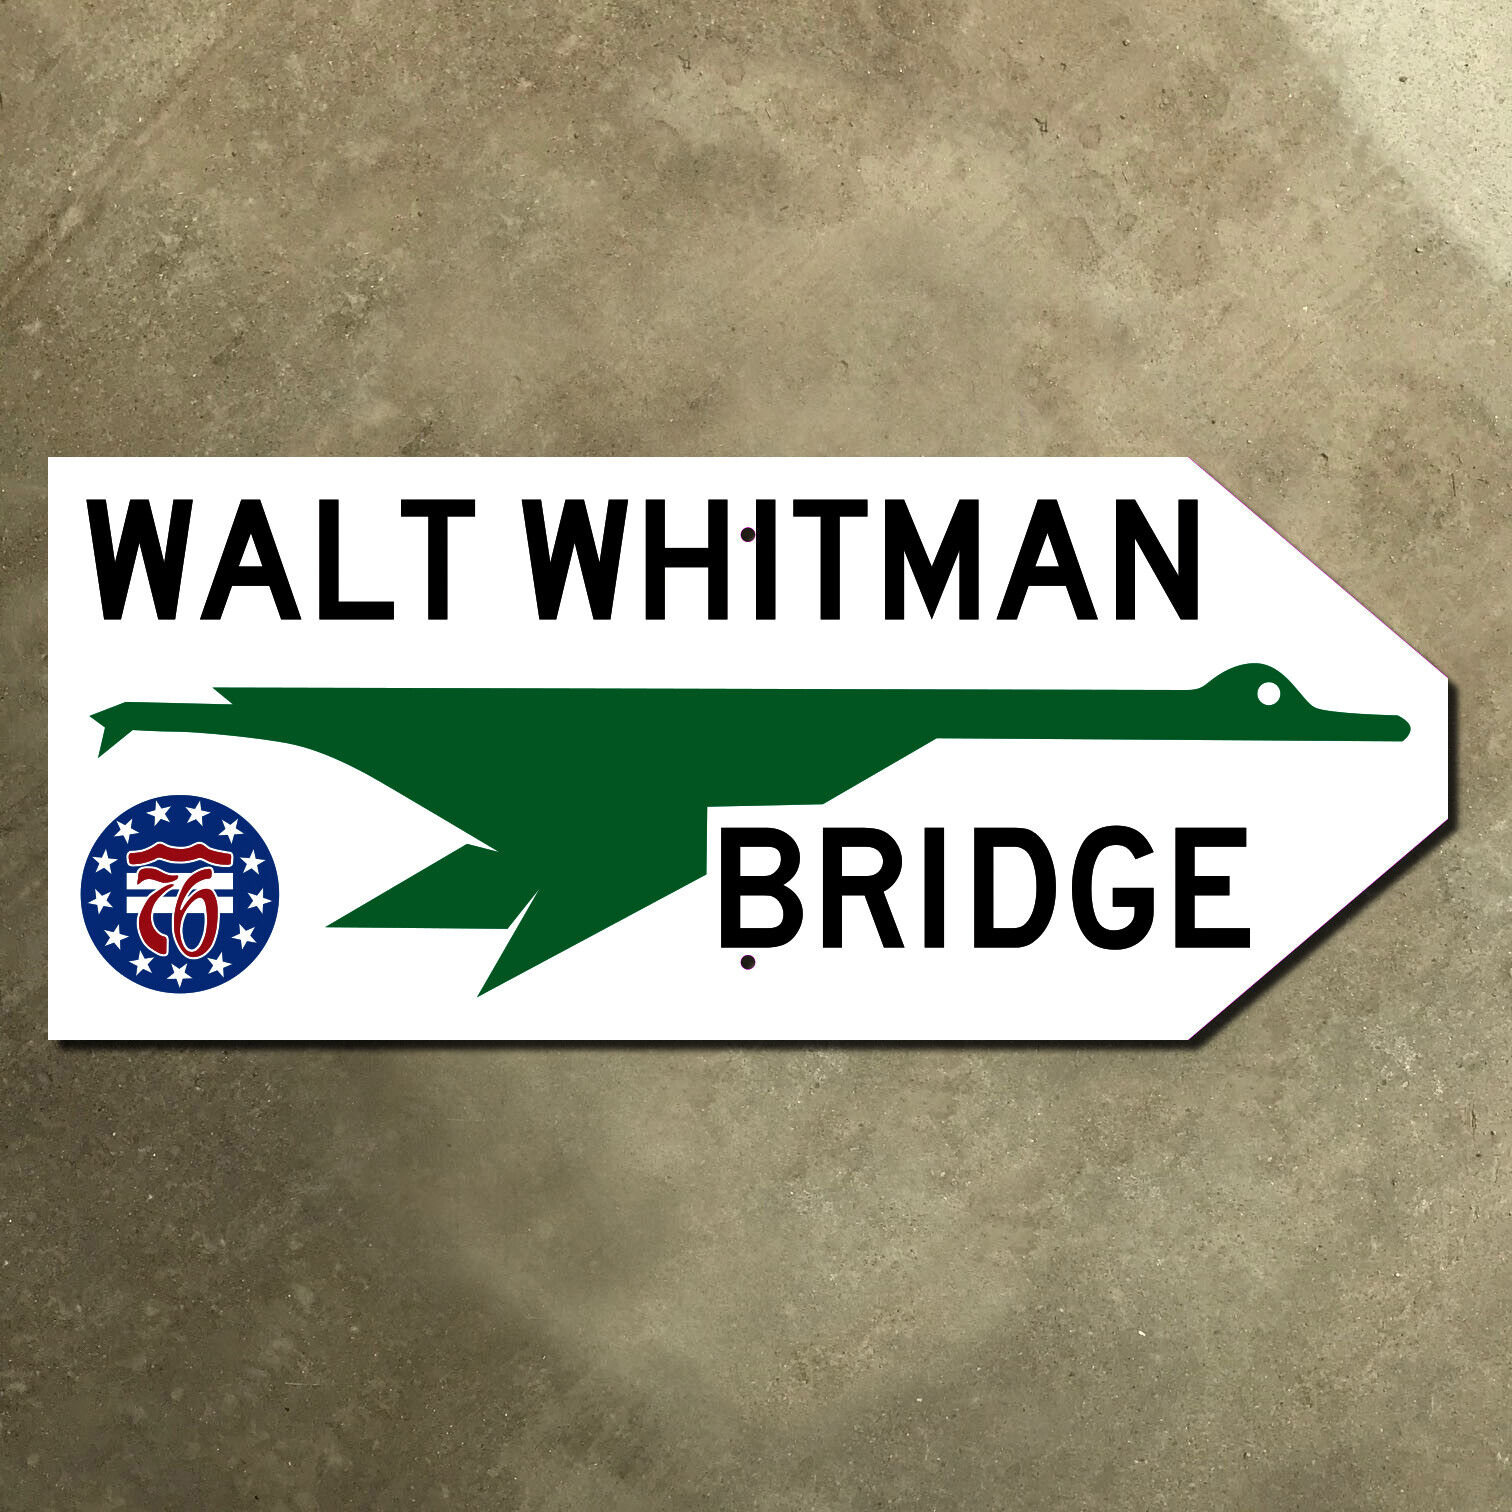 Pennsylvania Walt Whitman Bridge Philadelphia highway marker road sign 18x7